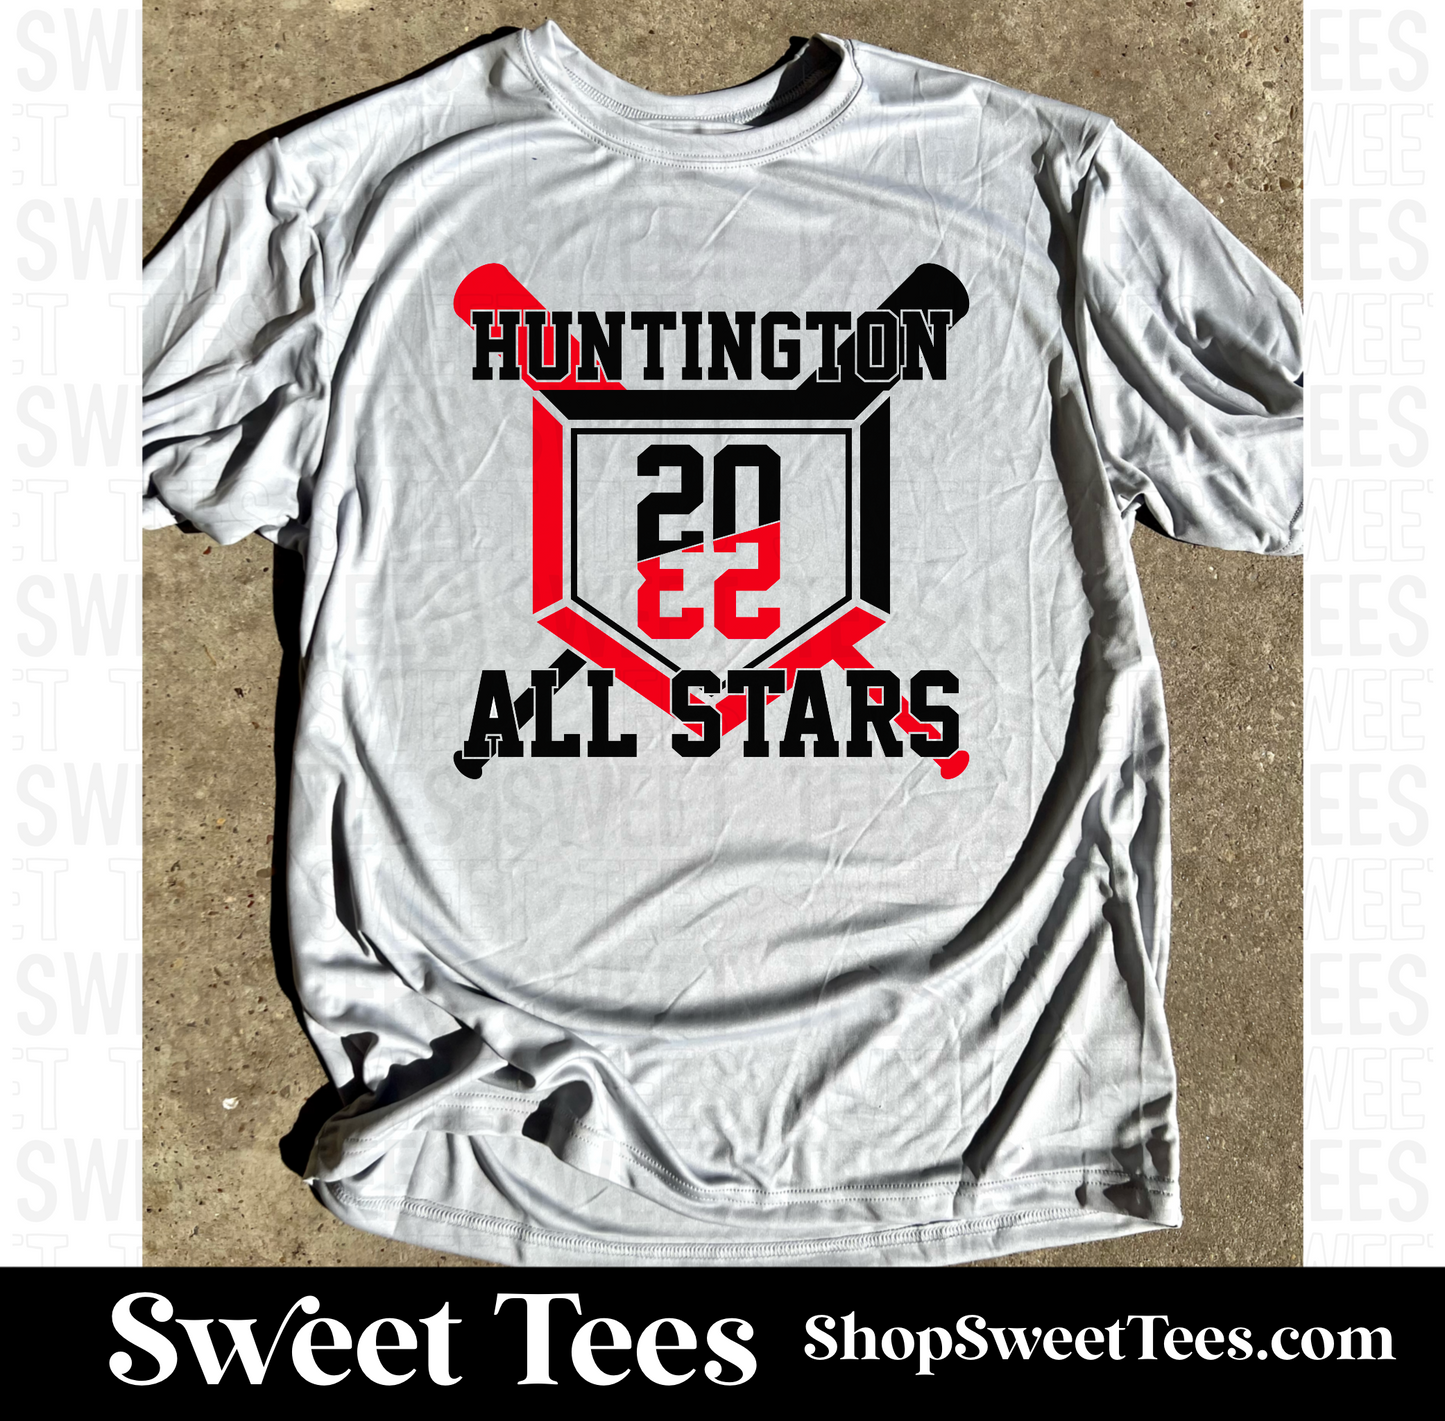 Huntington All-Stars Mirrored Plate drifit tee